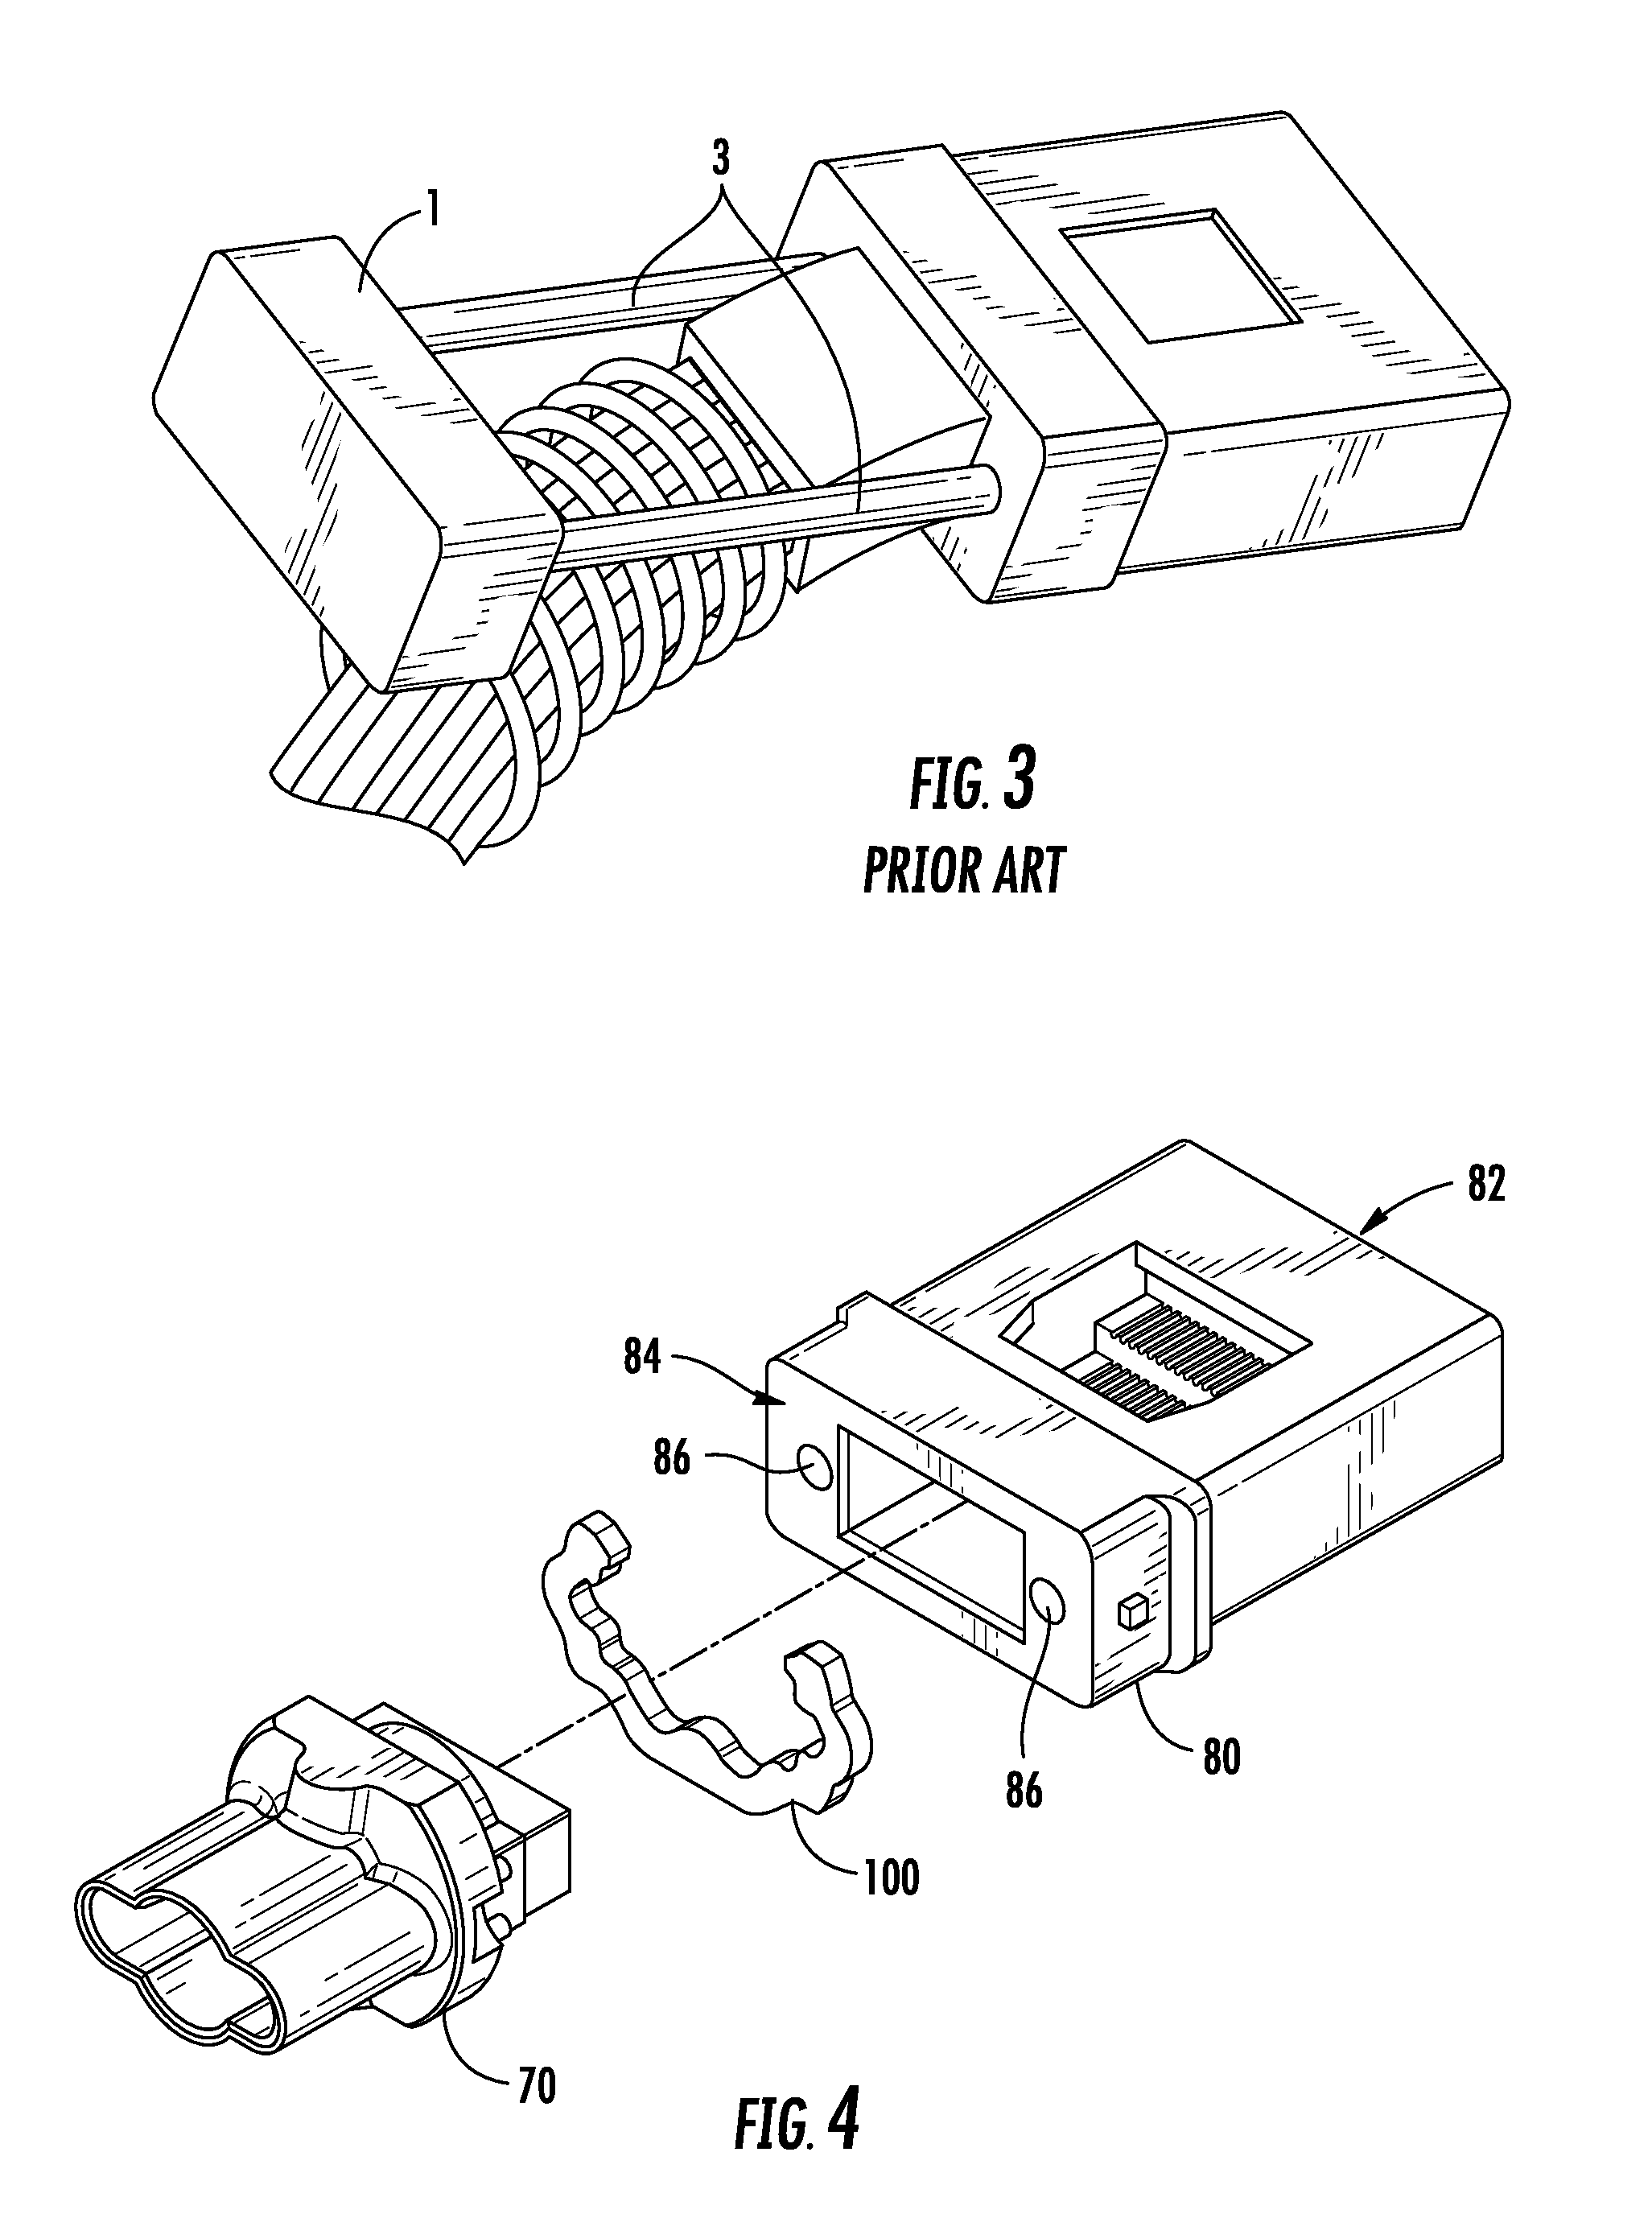 Transformable ferrule assemblies and fiber optic connectors